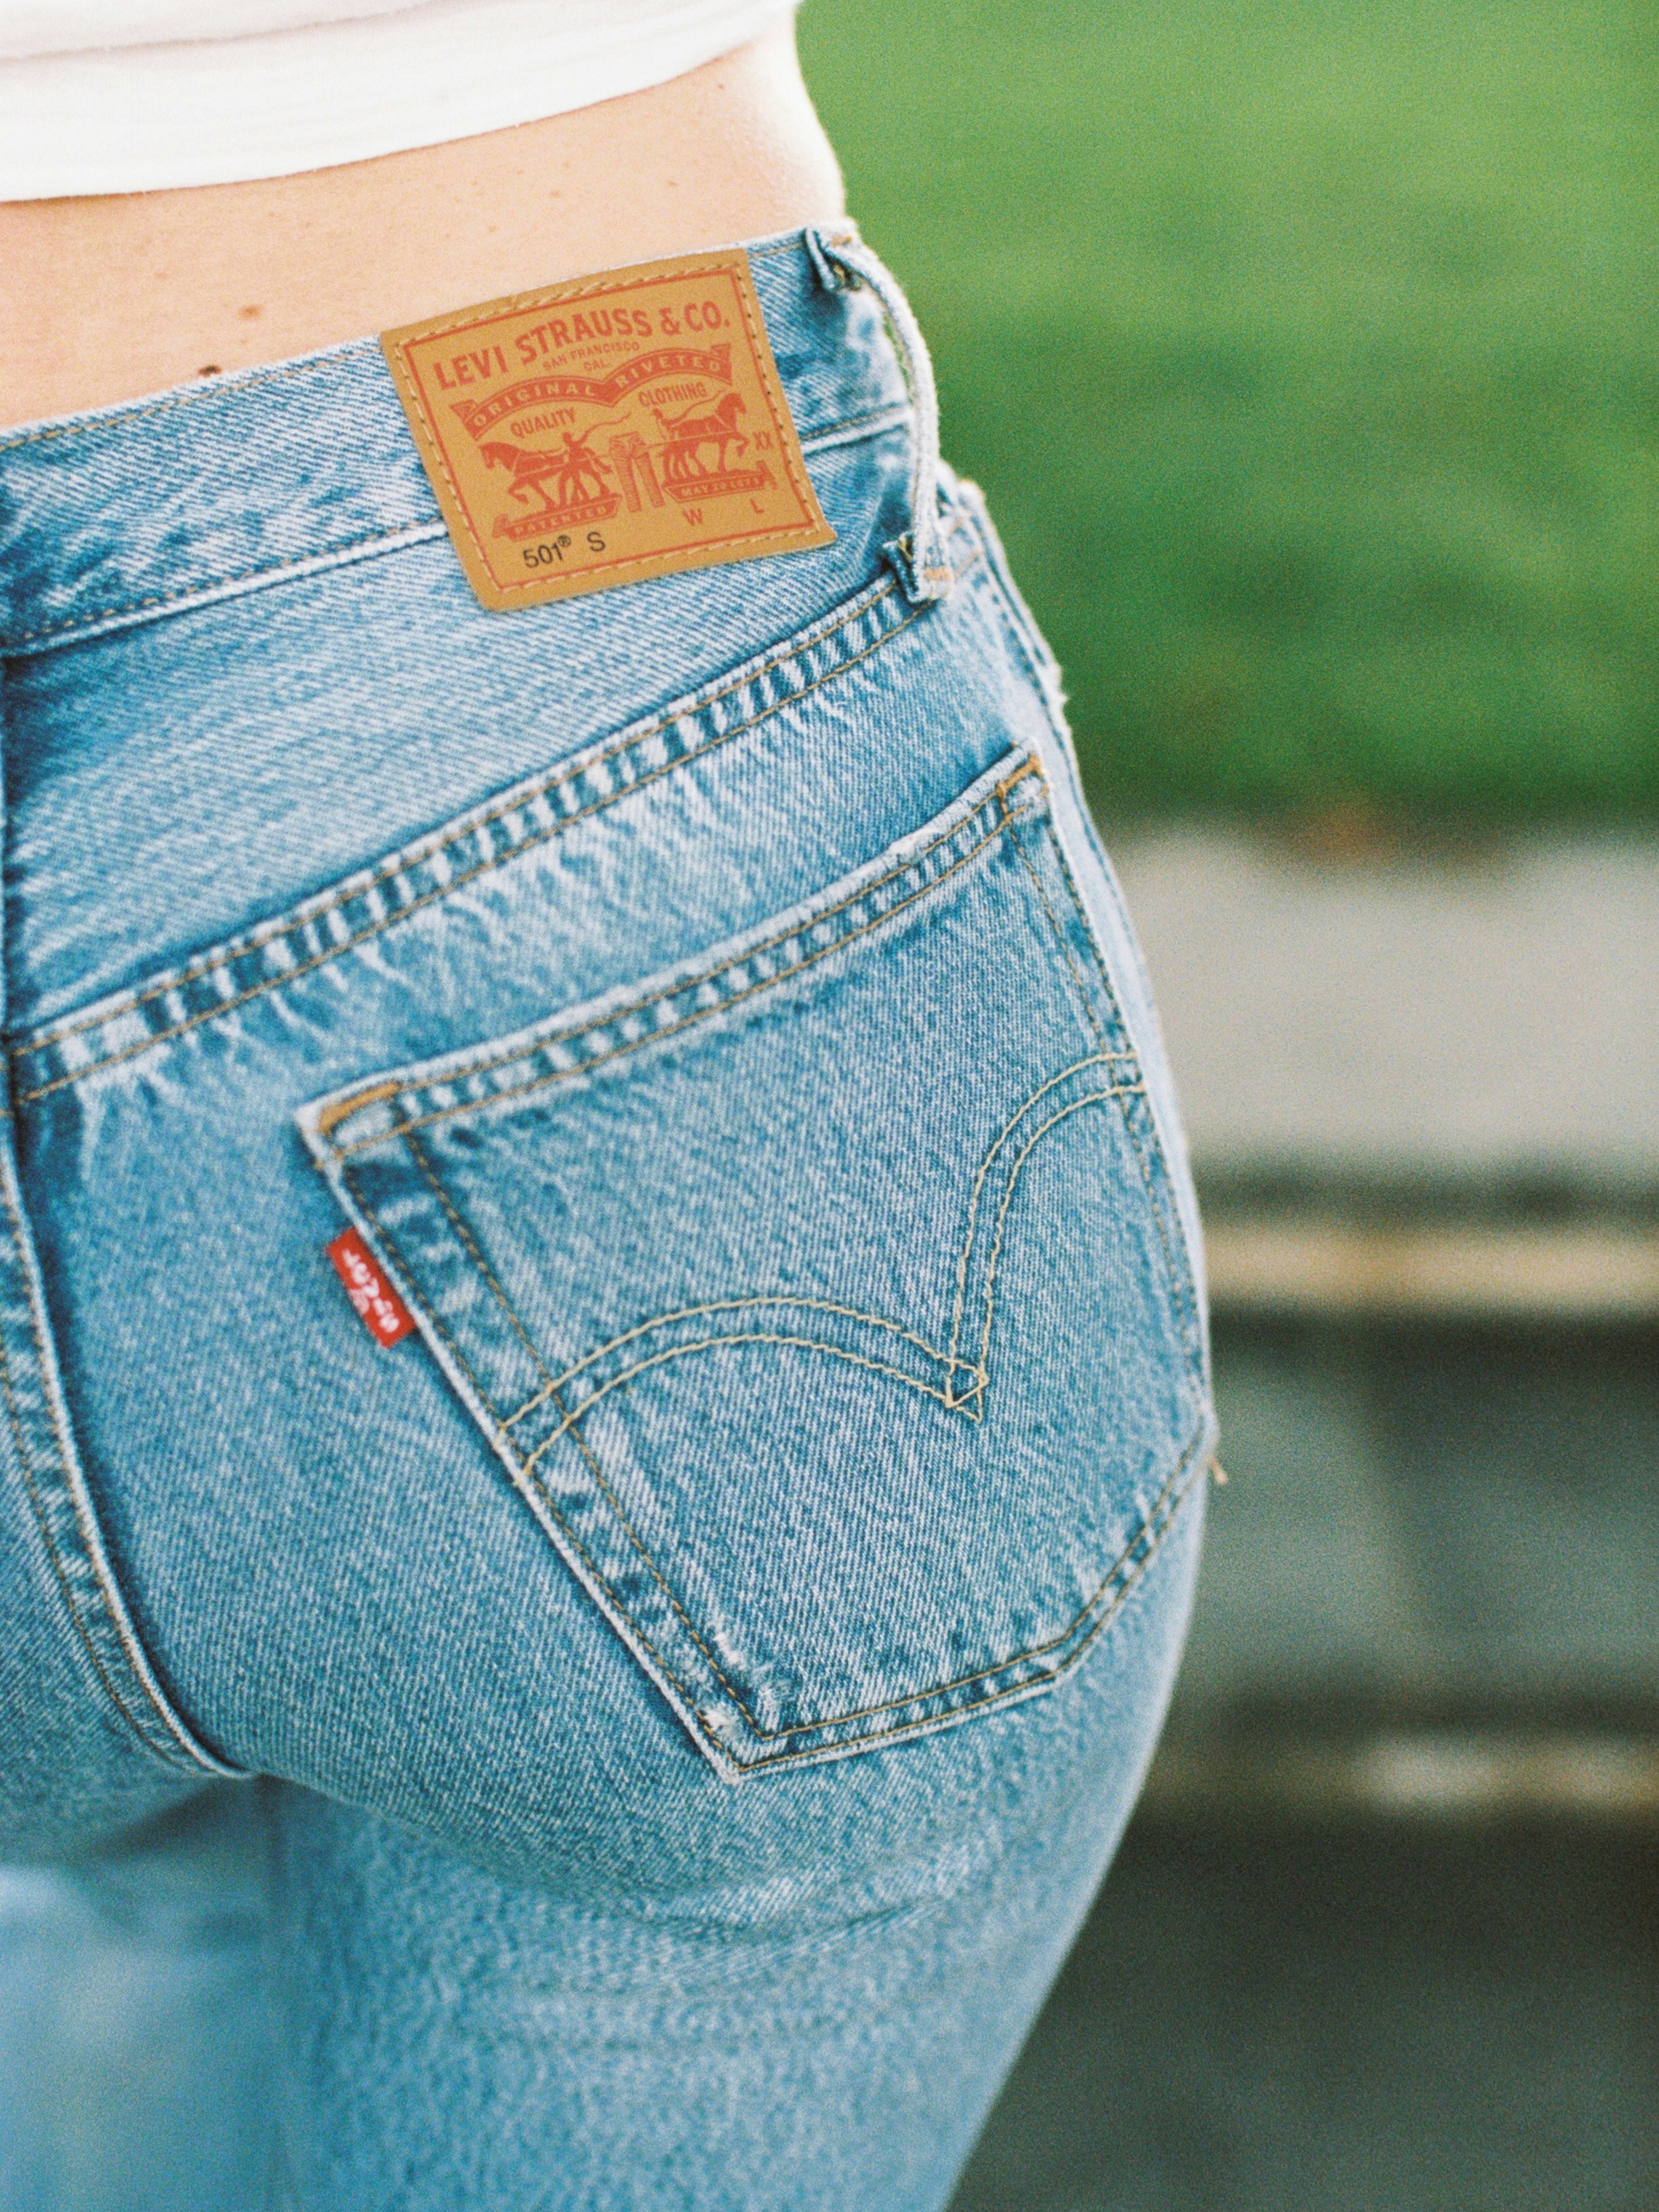 The Best Jeans for Short Women | Slashed Beauty